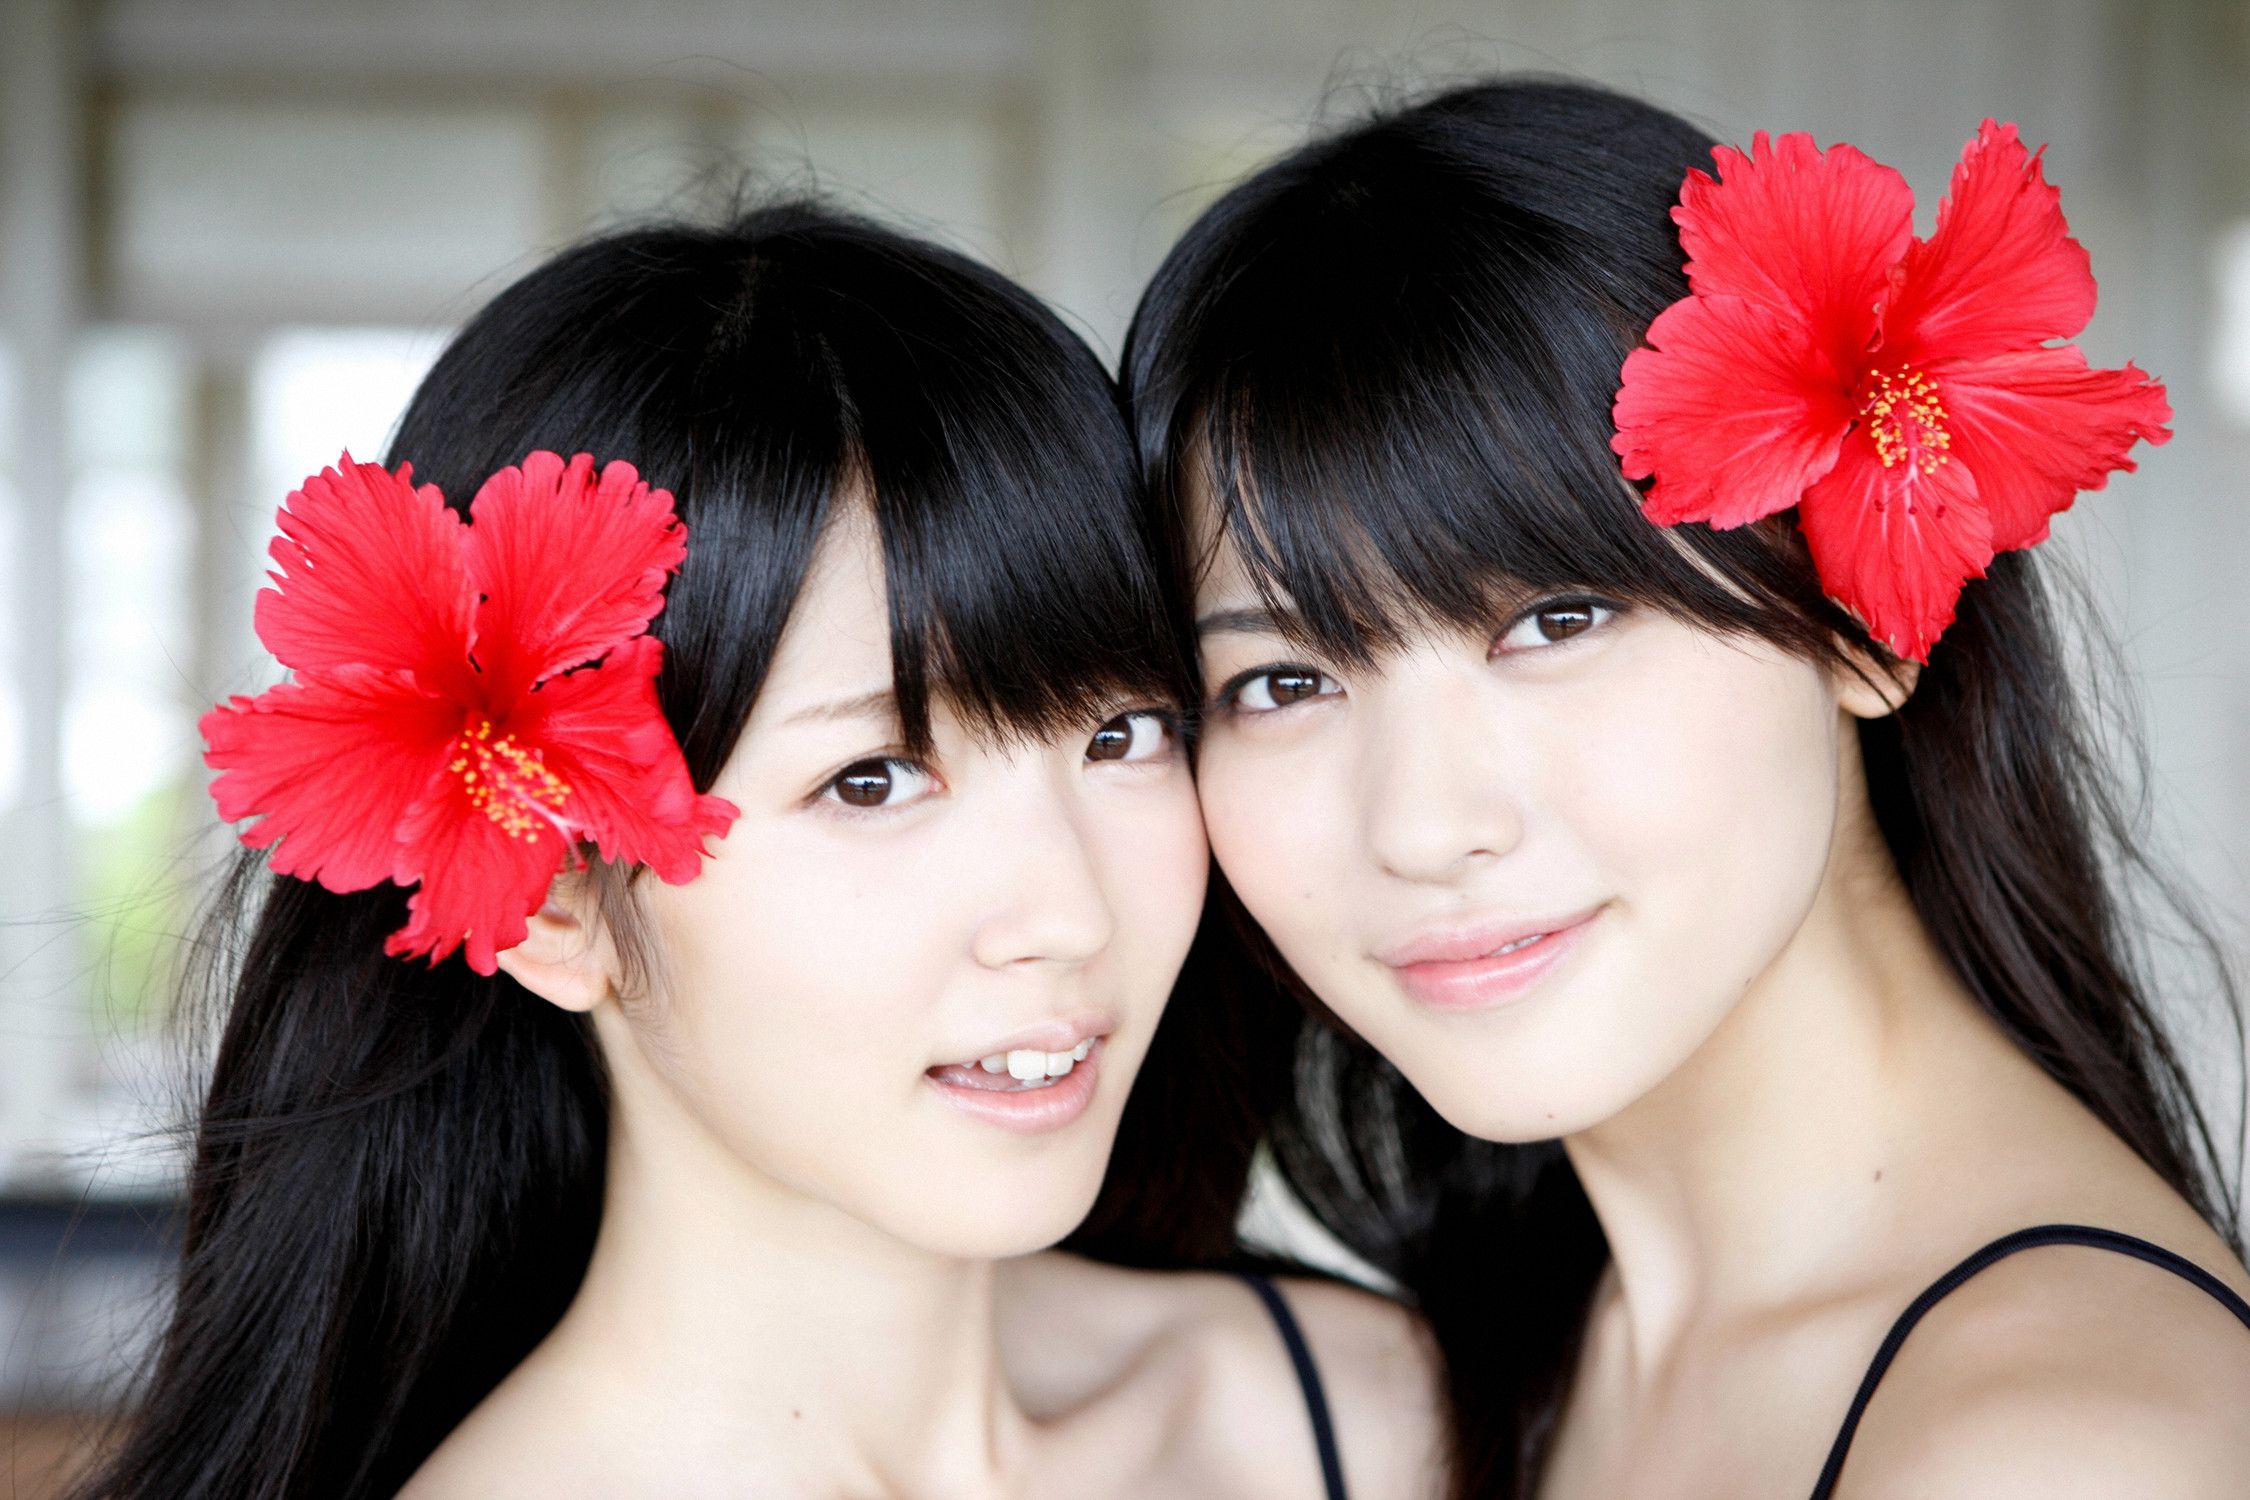 Japanese girl lesbian. Airi Suzuki and Maimi Yajima. Японские девушки подруги. Японские девушки для любви. Японские девочки групповое.